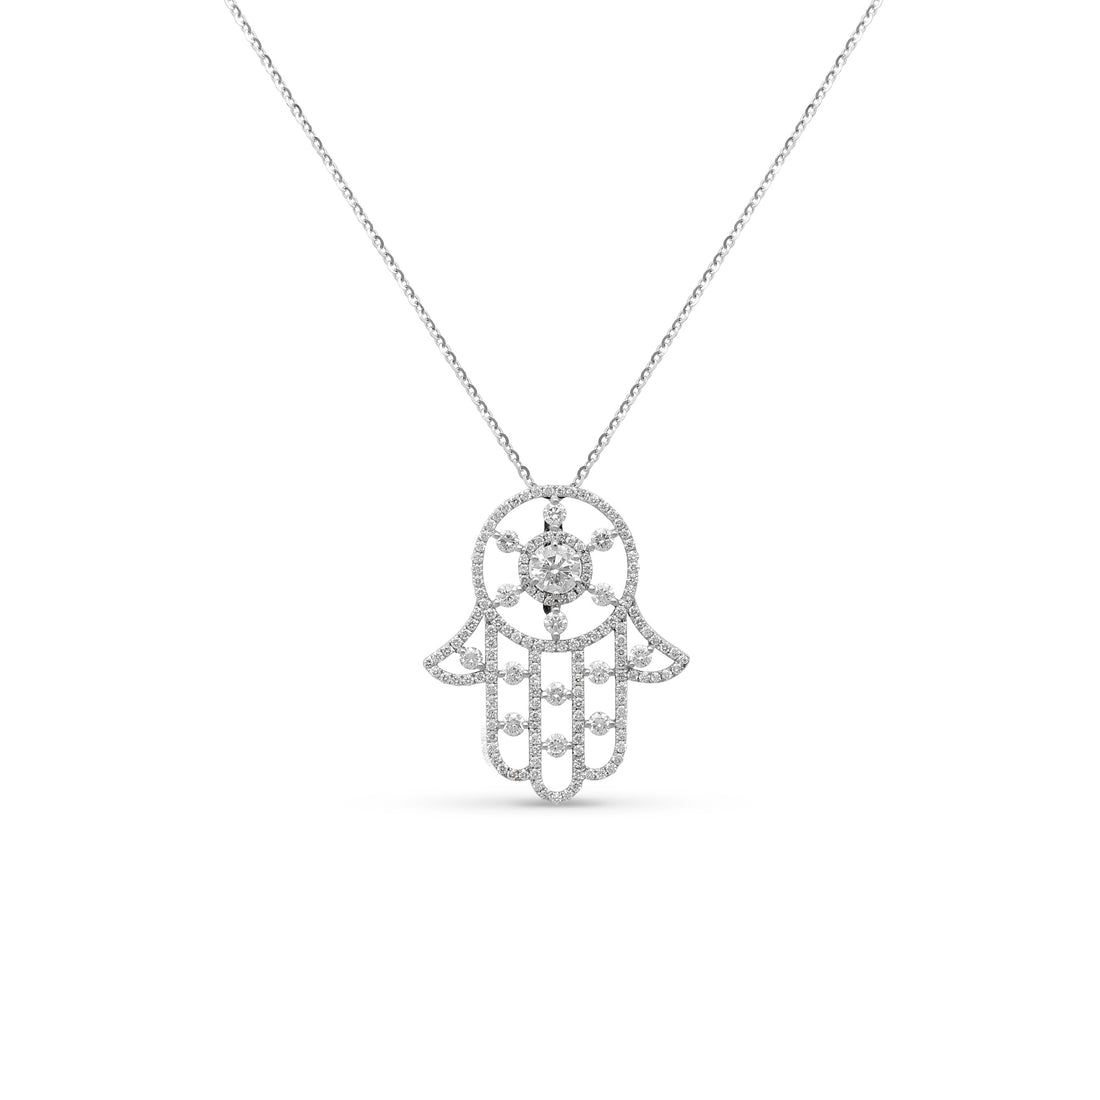  1.75-carat diamond hamsa charm necklace - Abu Dhabi hand of Fatima pendant 